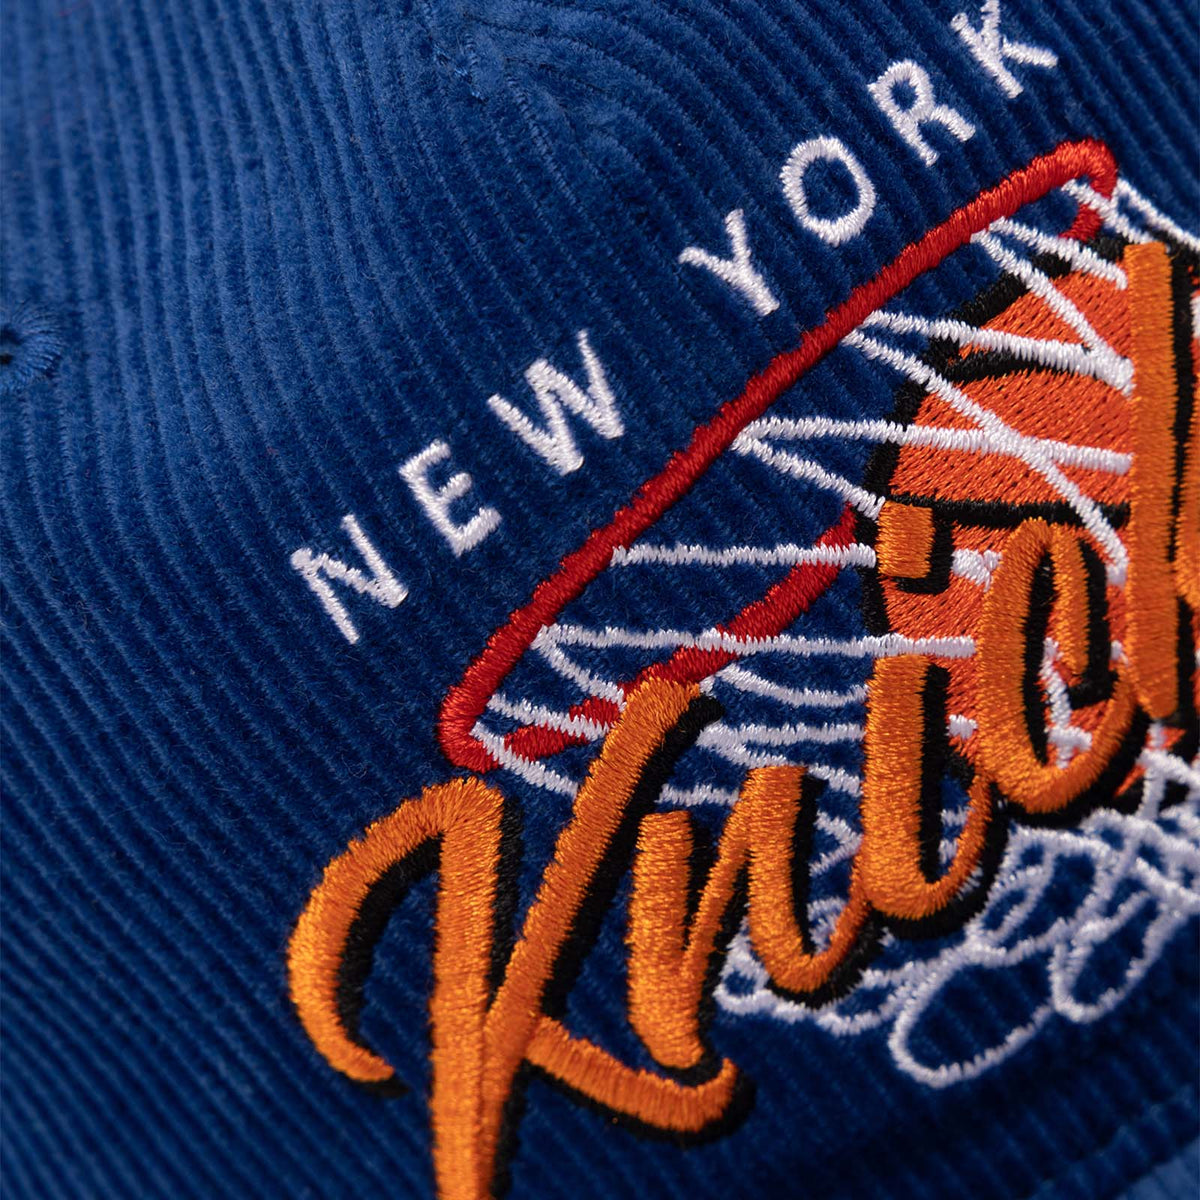 New York Knicks Nothing But Net Corduroy Deadstock Snapback - Blue